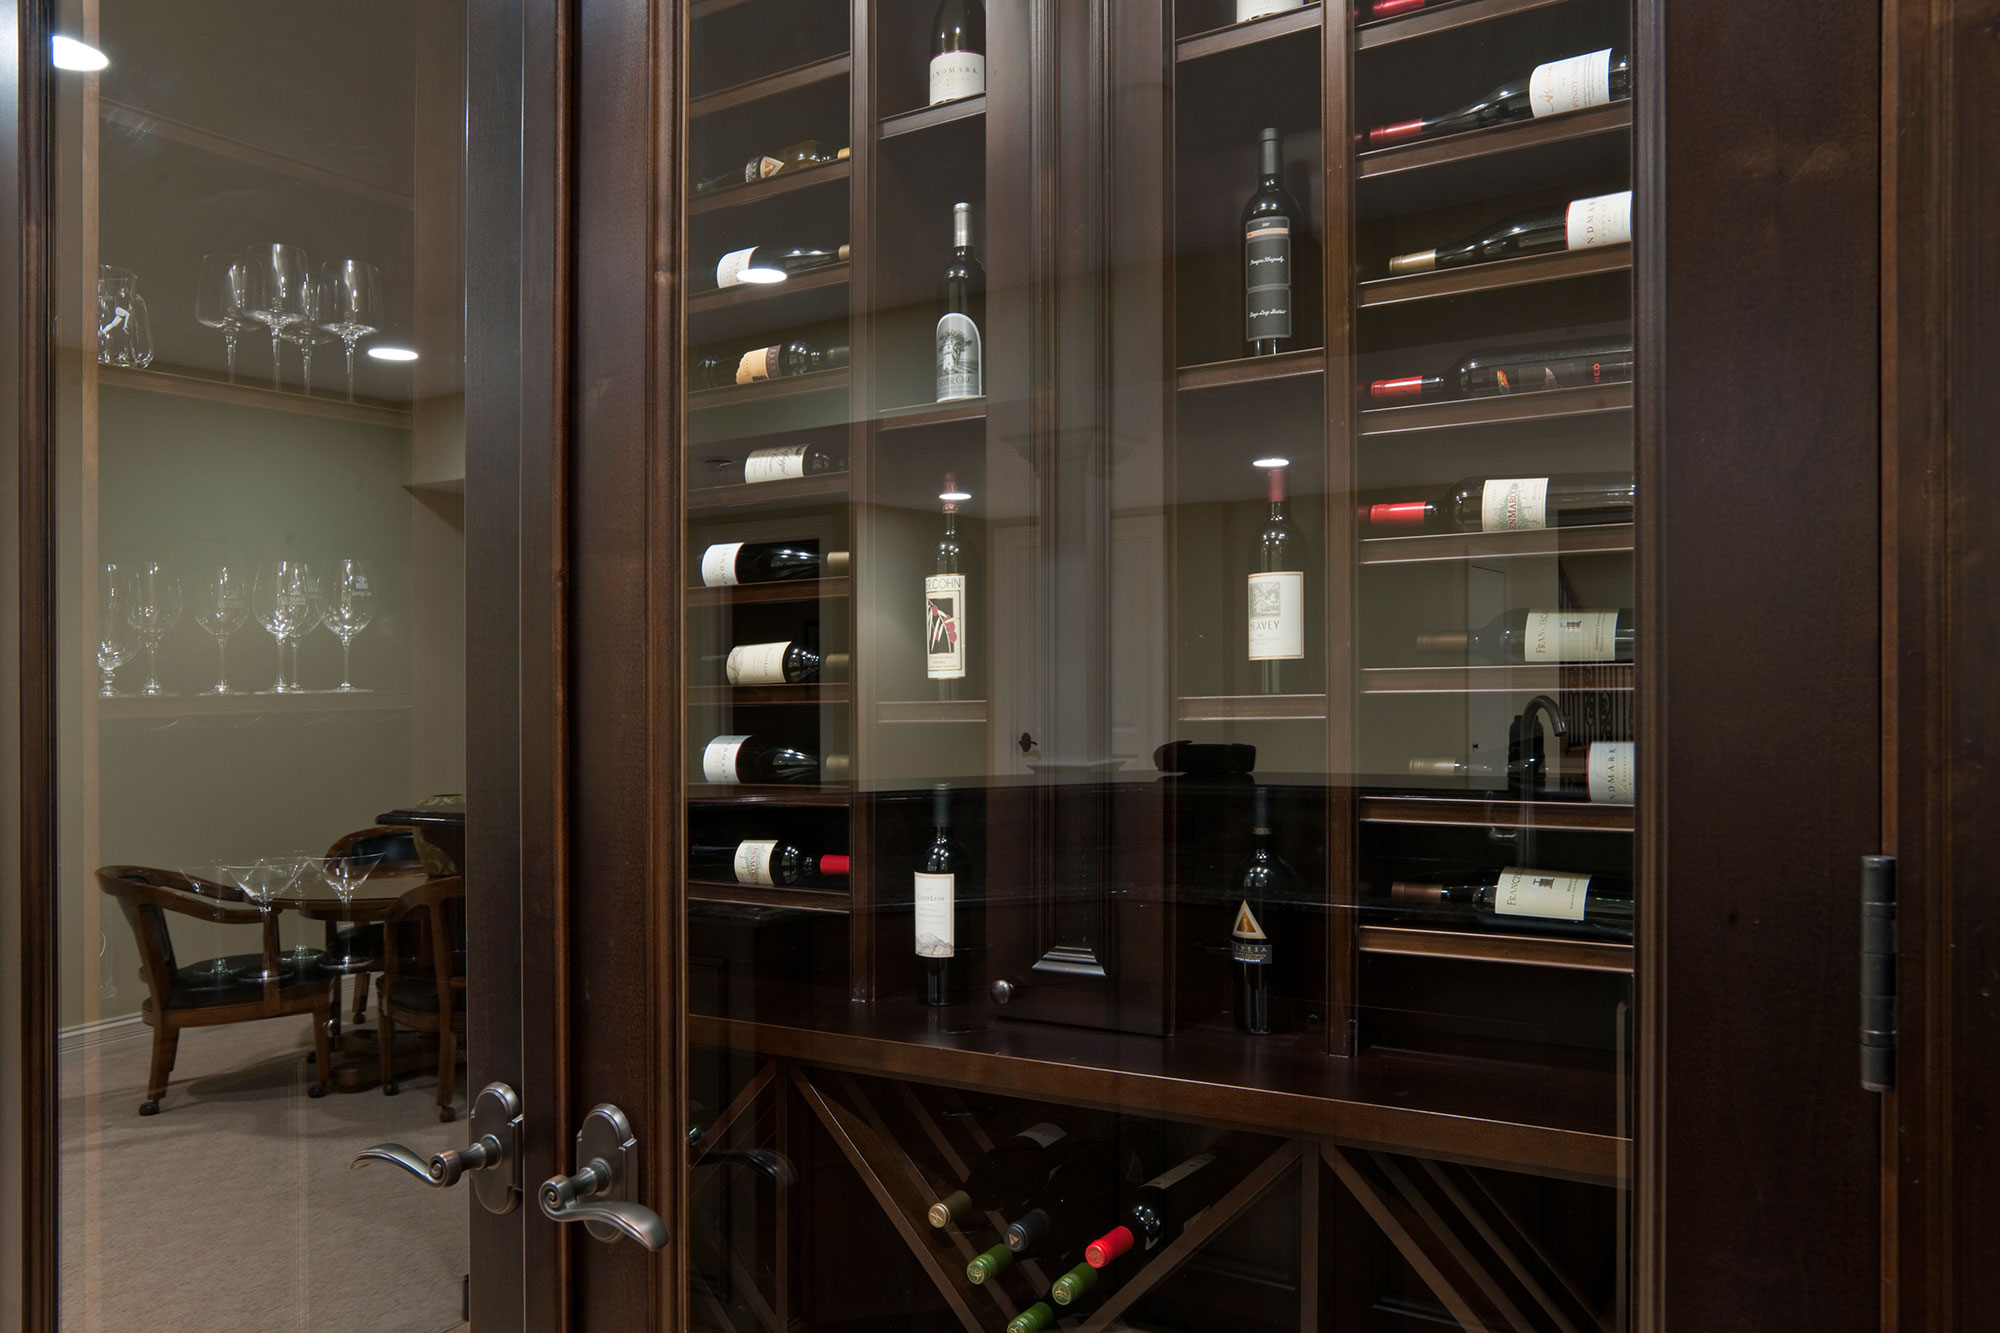 Custom made double glass door enhances presentation of various wines.  - Glenview Haus - Custom Doors, Wine Cellars and Cabinets in Chicago